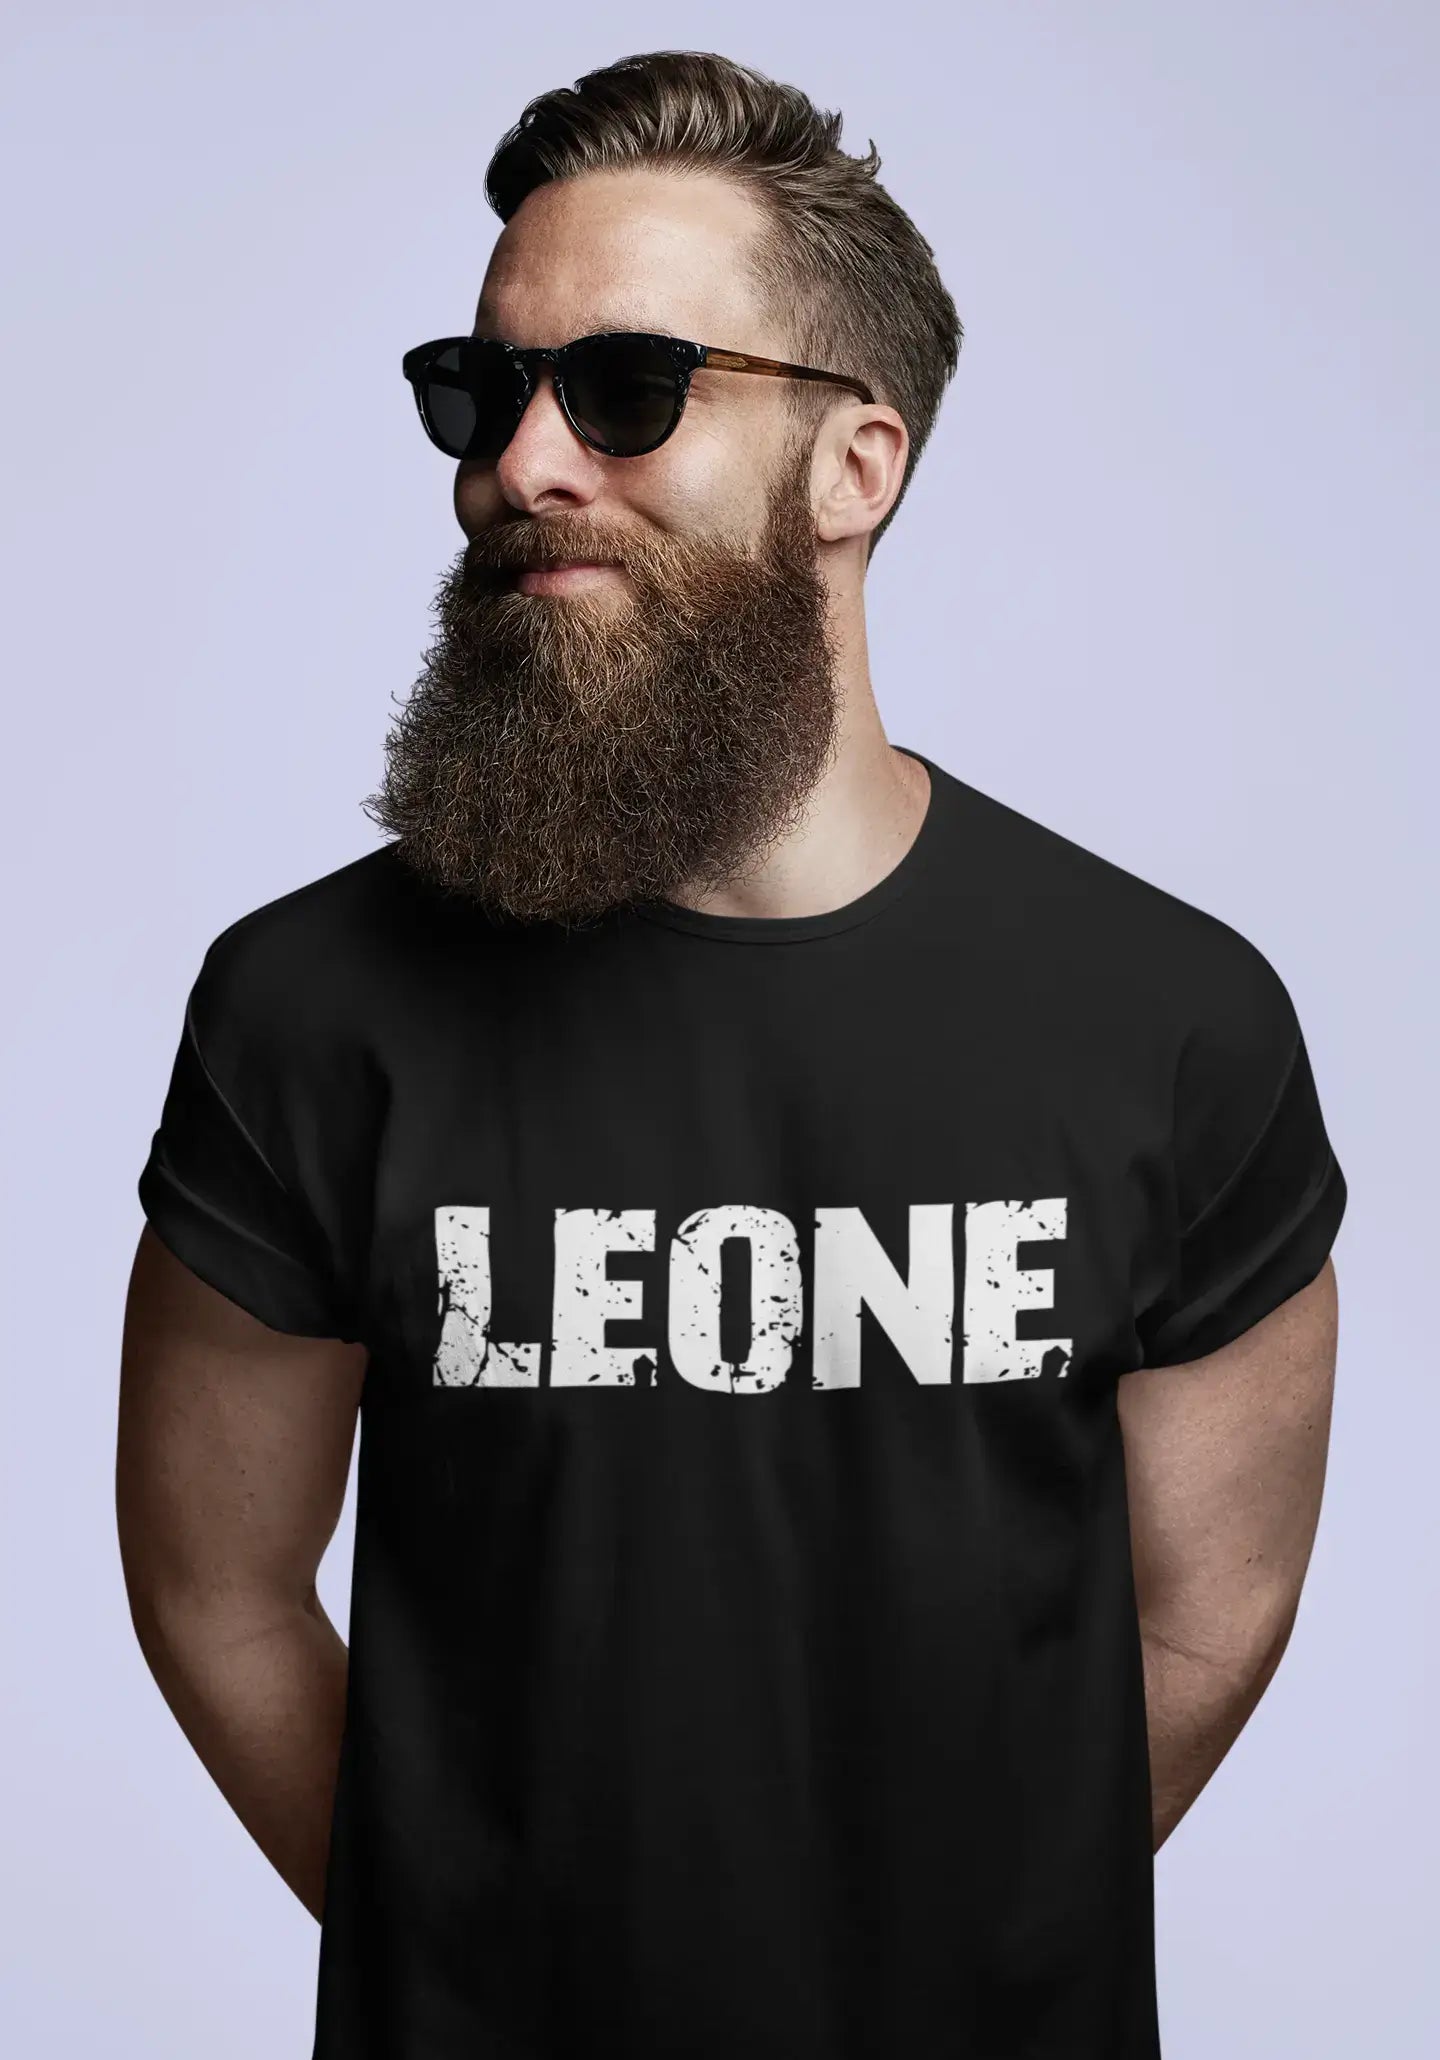 leone Men's Retro T shirt Black Birthday Gift 00553